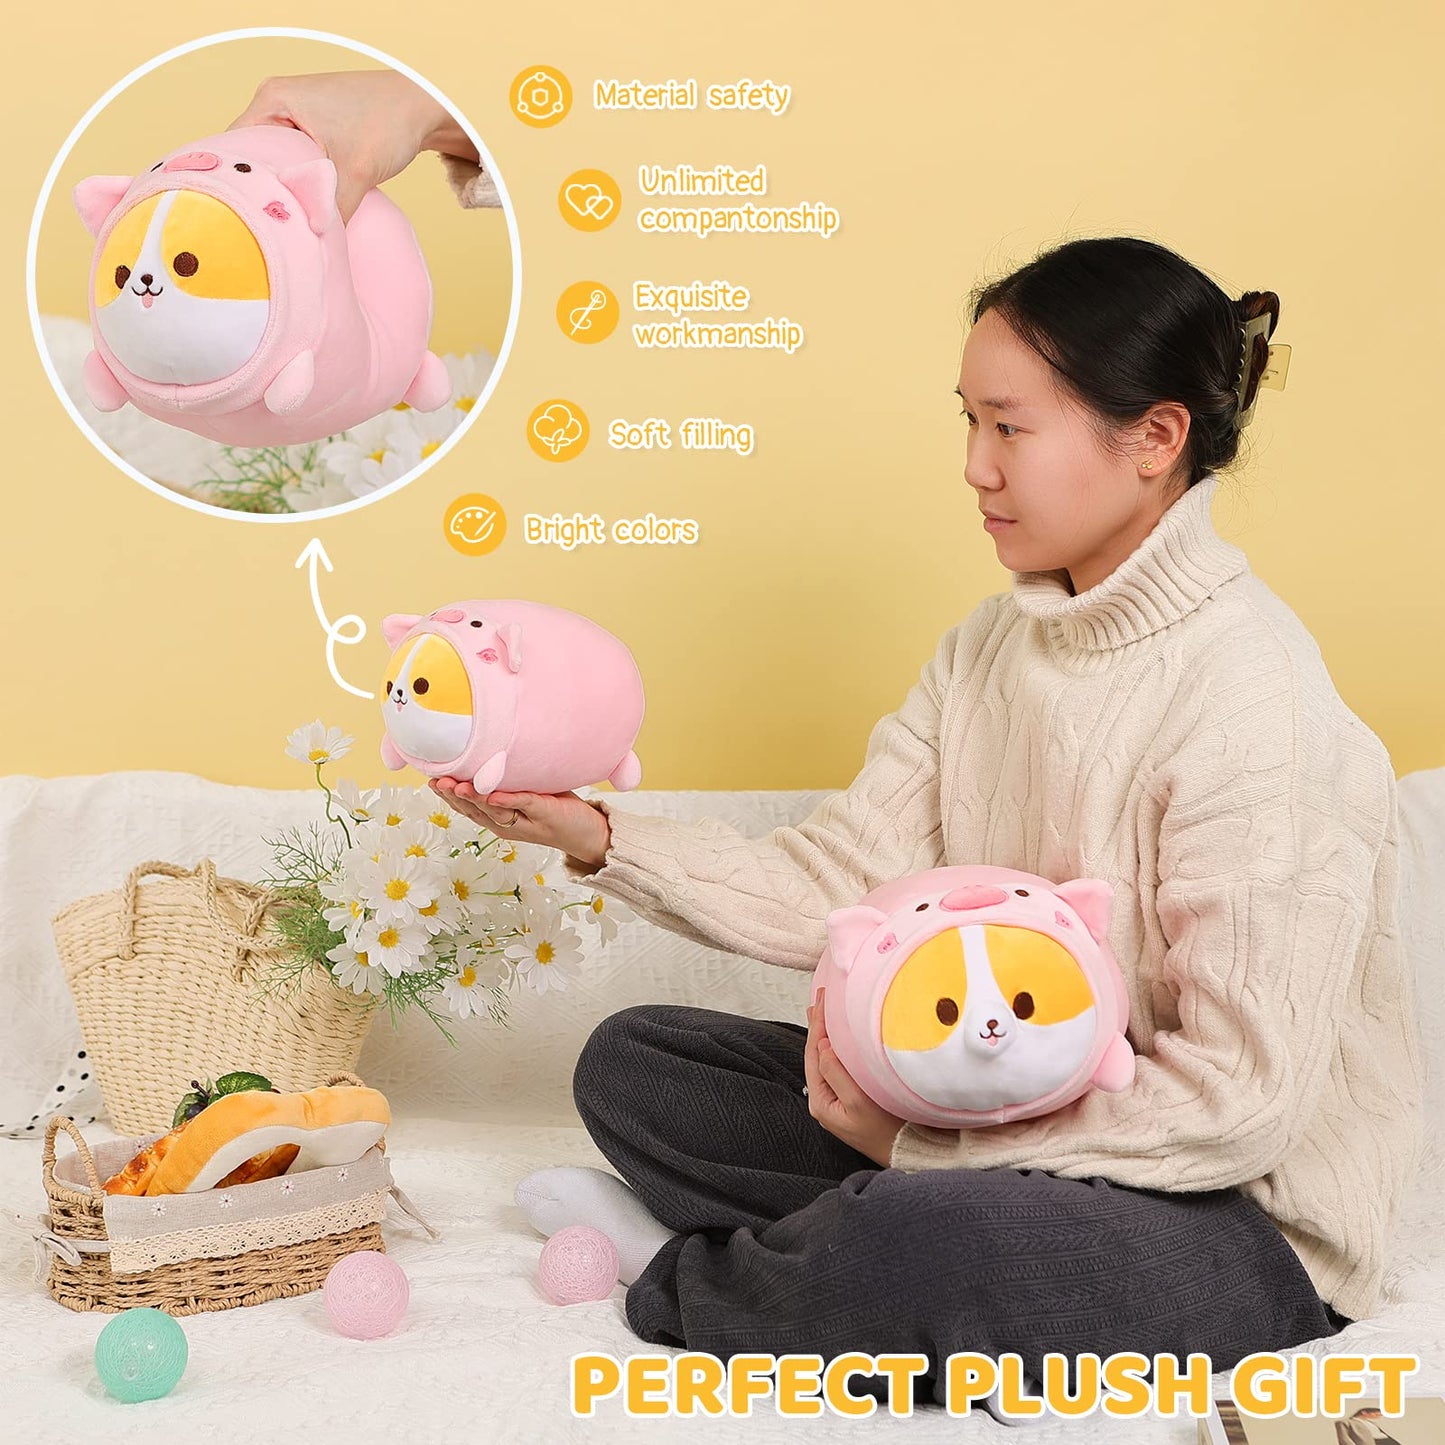 Cute Pink Pig Corgi Plush Pillow Piggy Shiba Inu Stuffed Animal, Soft Kawaii Corgi with Pig Costume, Hug Plush Soft Pillow Toy, Gift for Kids